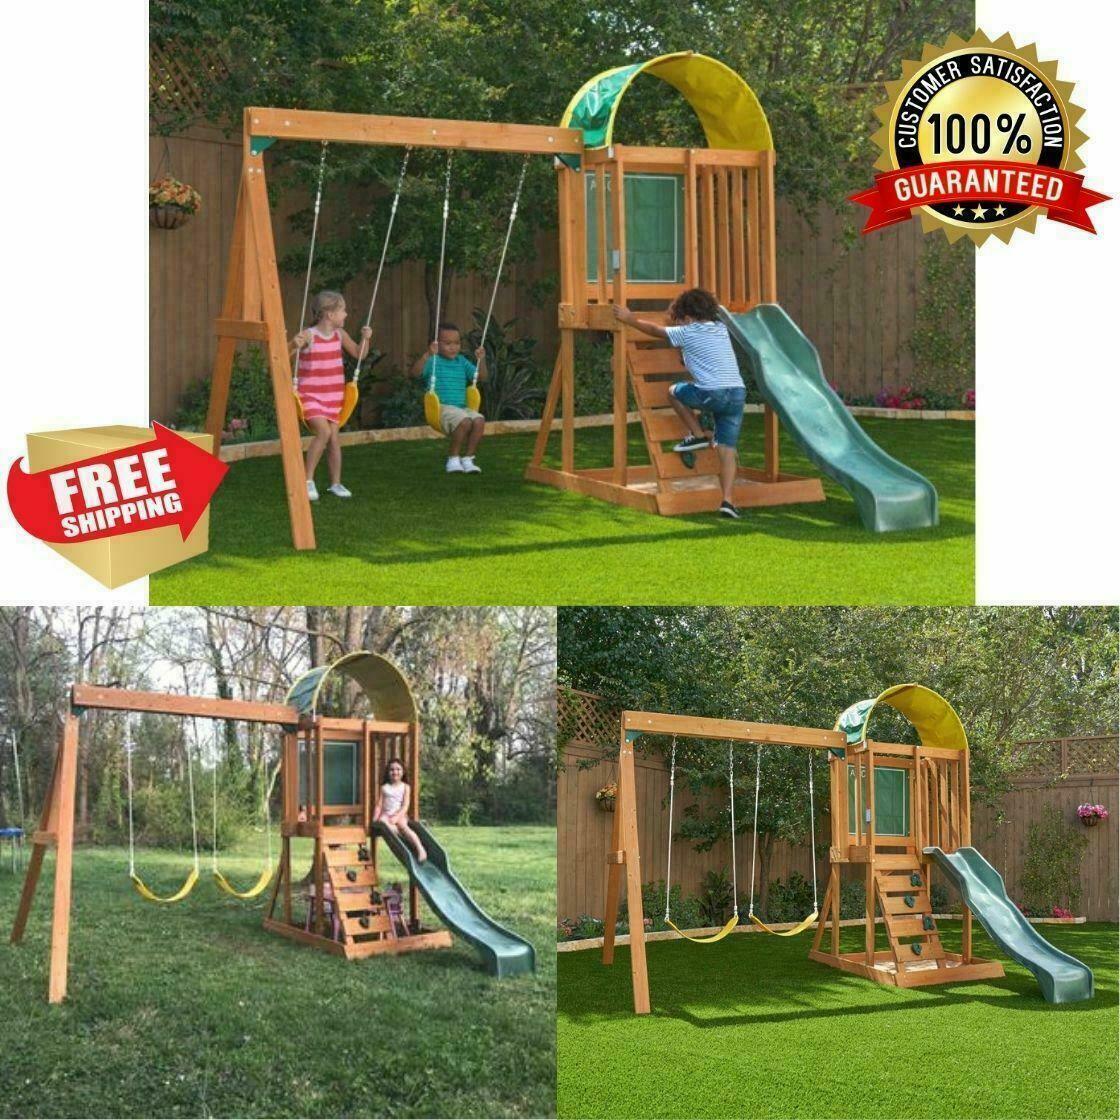 Slide Kids Playground Outdoor Backyard Play W/ Sandbox